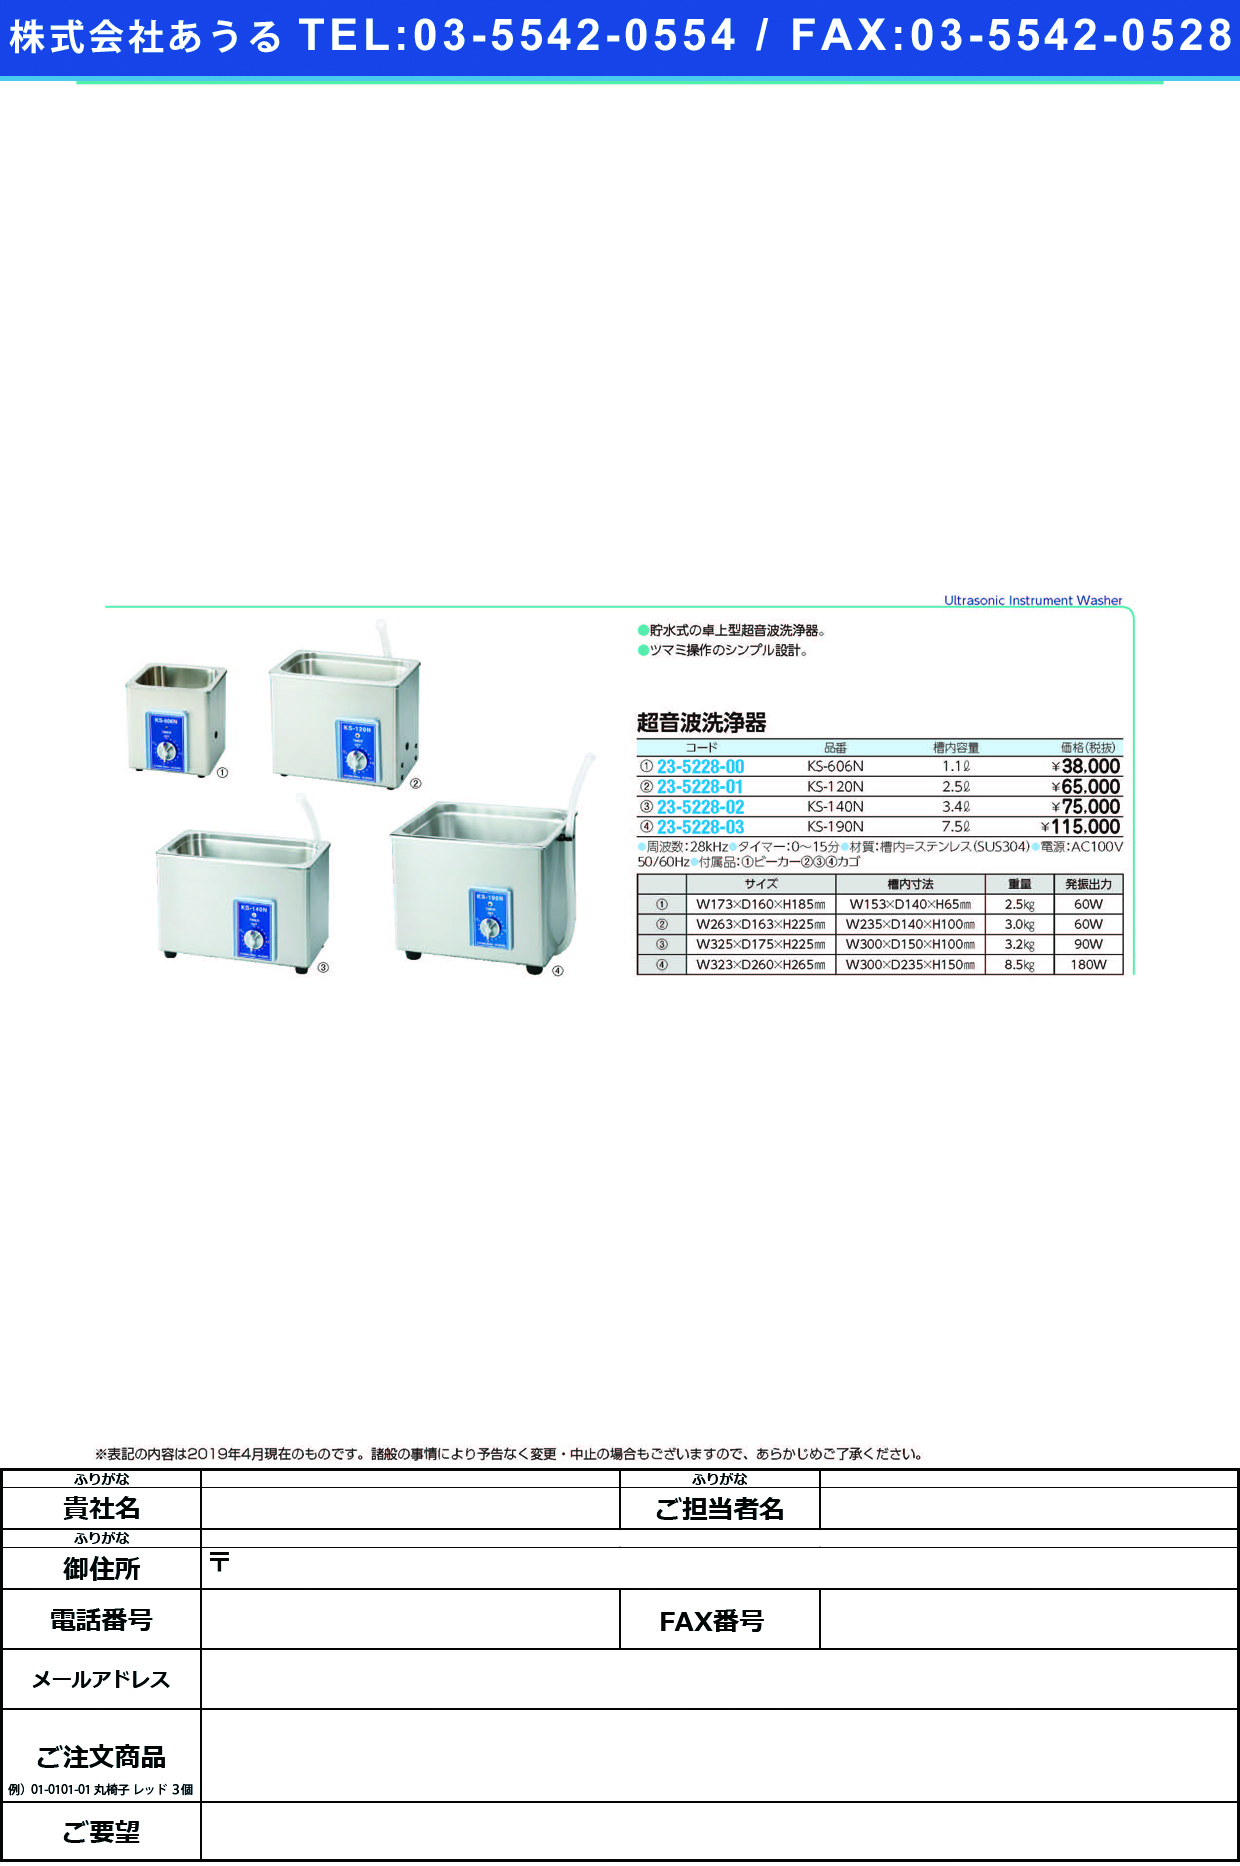 (23-5228-03)超音波洗浄器 KS-190N ﾁｮｳｵﾝﾊﾟｾﾝｼﾞｮｳｷ【1台単位】【2019年カタログ商品】